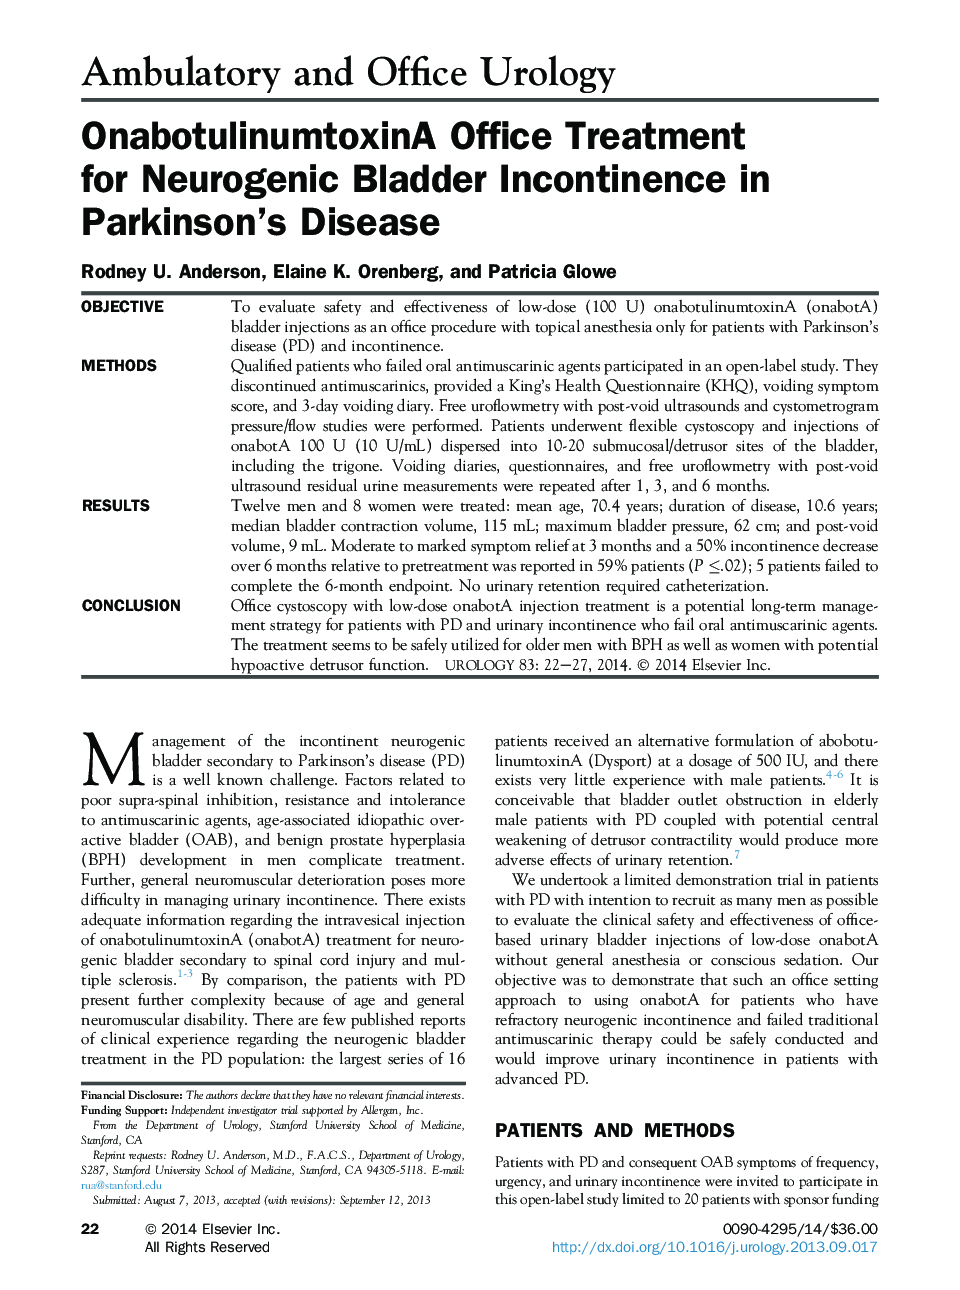 OnabotulinumtoxinA Office Treatment for Neurogenic Bladder Incontinence in Parkinson's Disease 